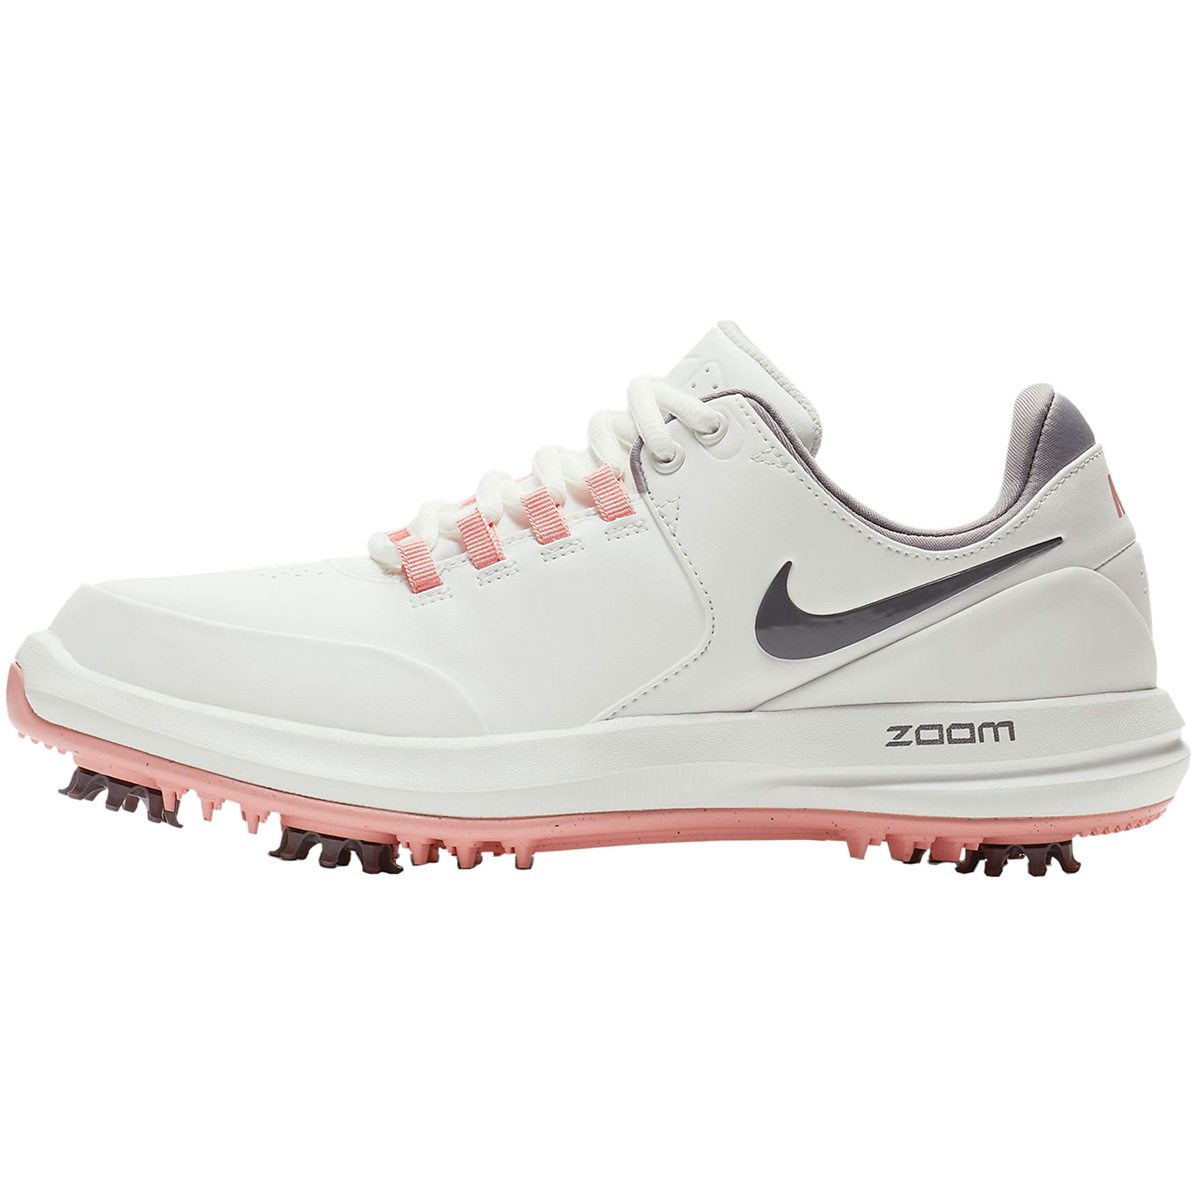 nike air zoom accurate women's golf shoe